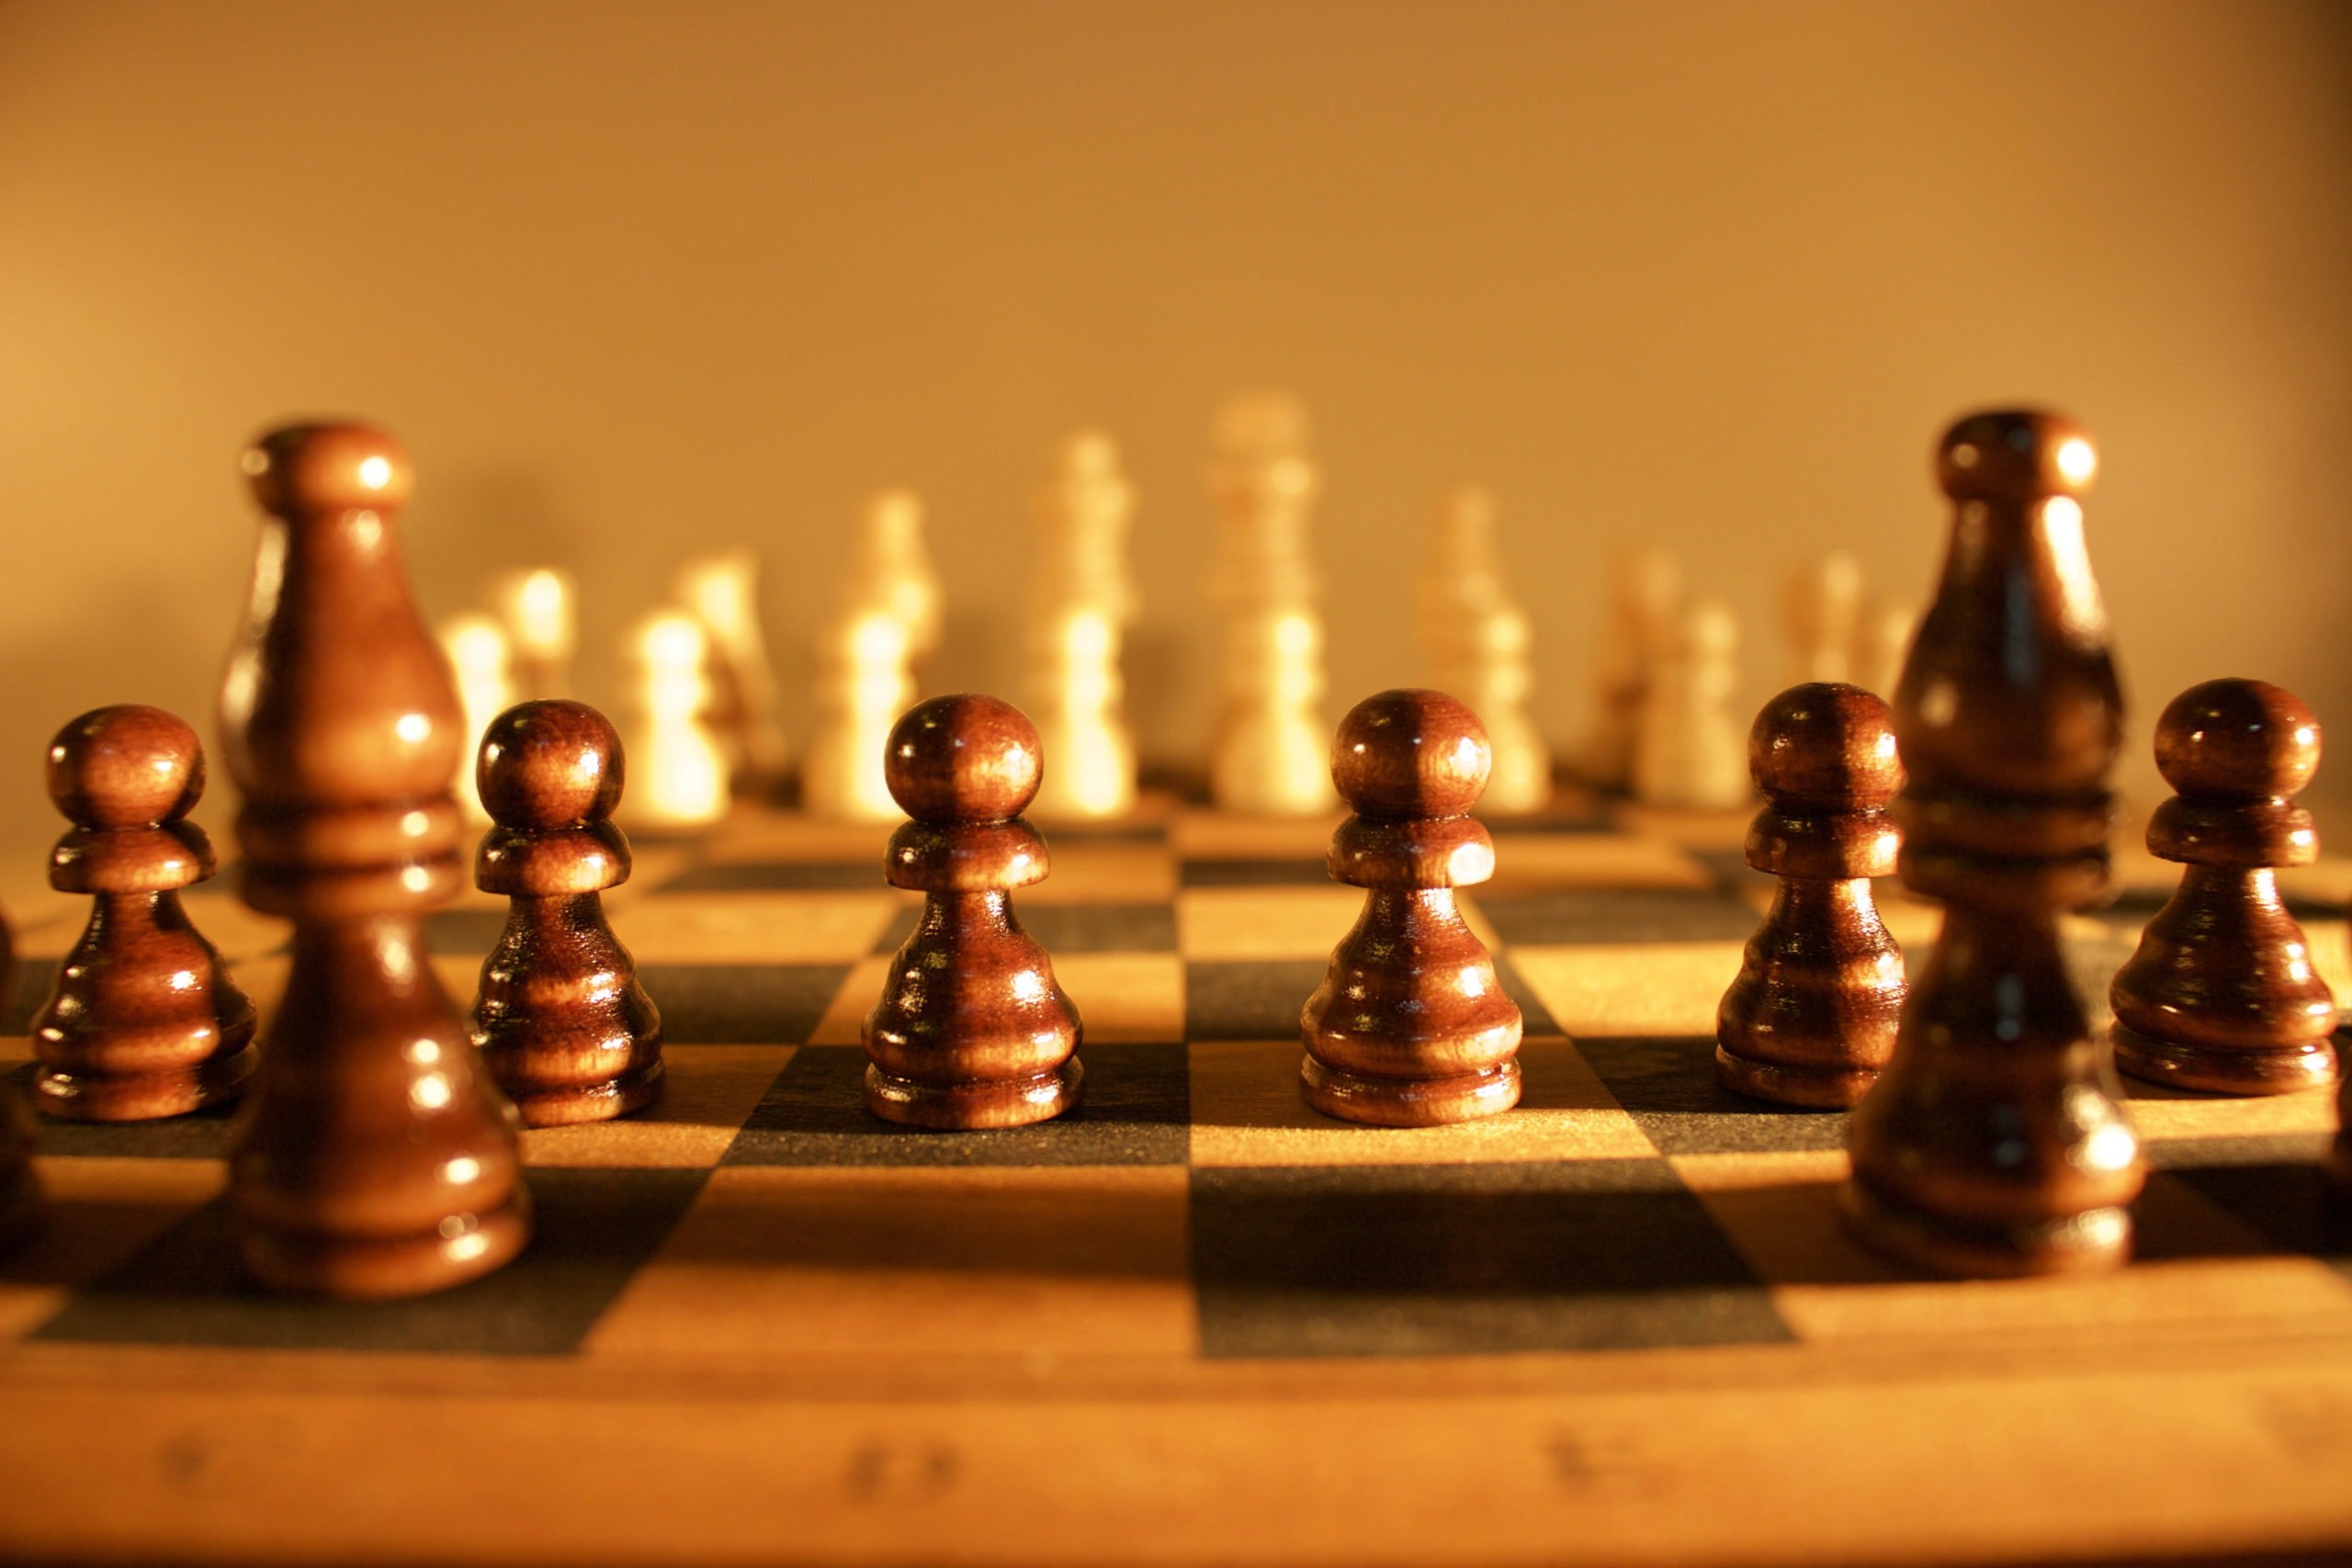 Alireza Firouzja: I was very close to win the whole thing!, Norway Chess